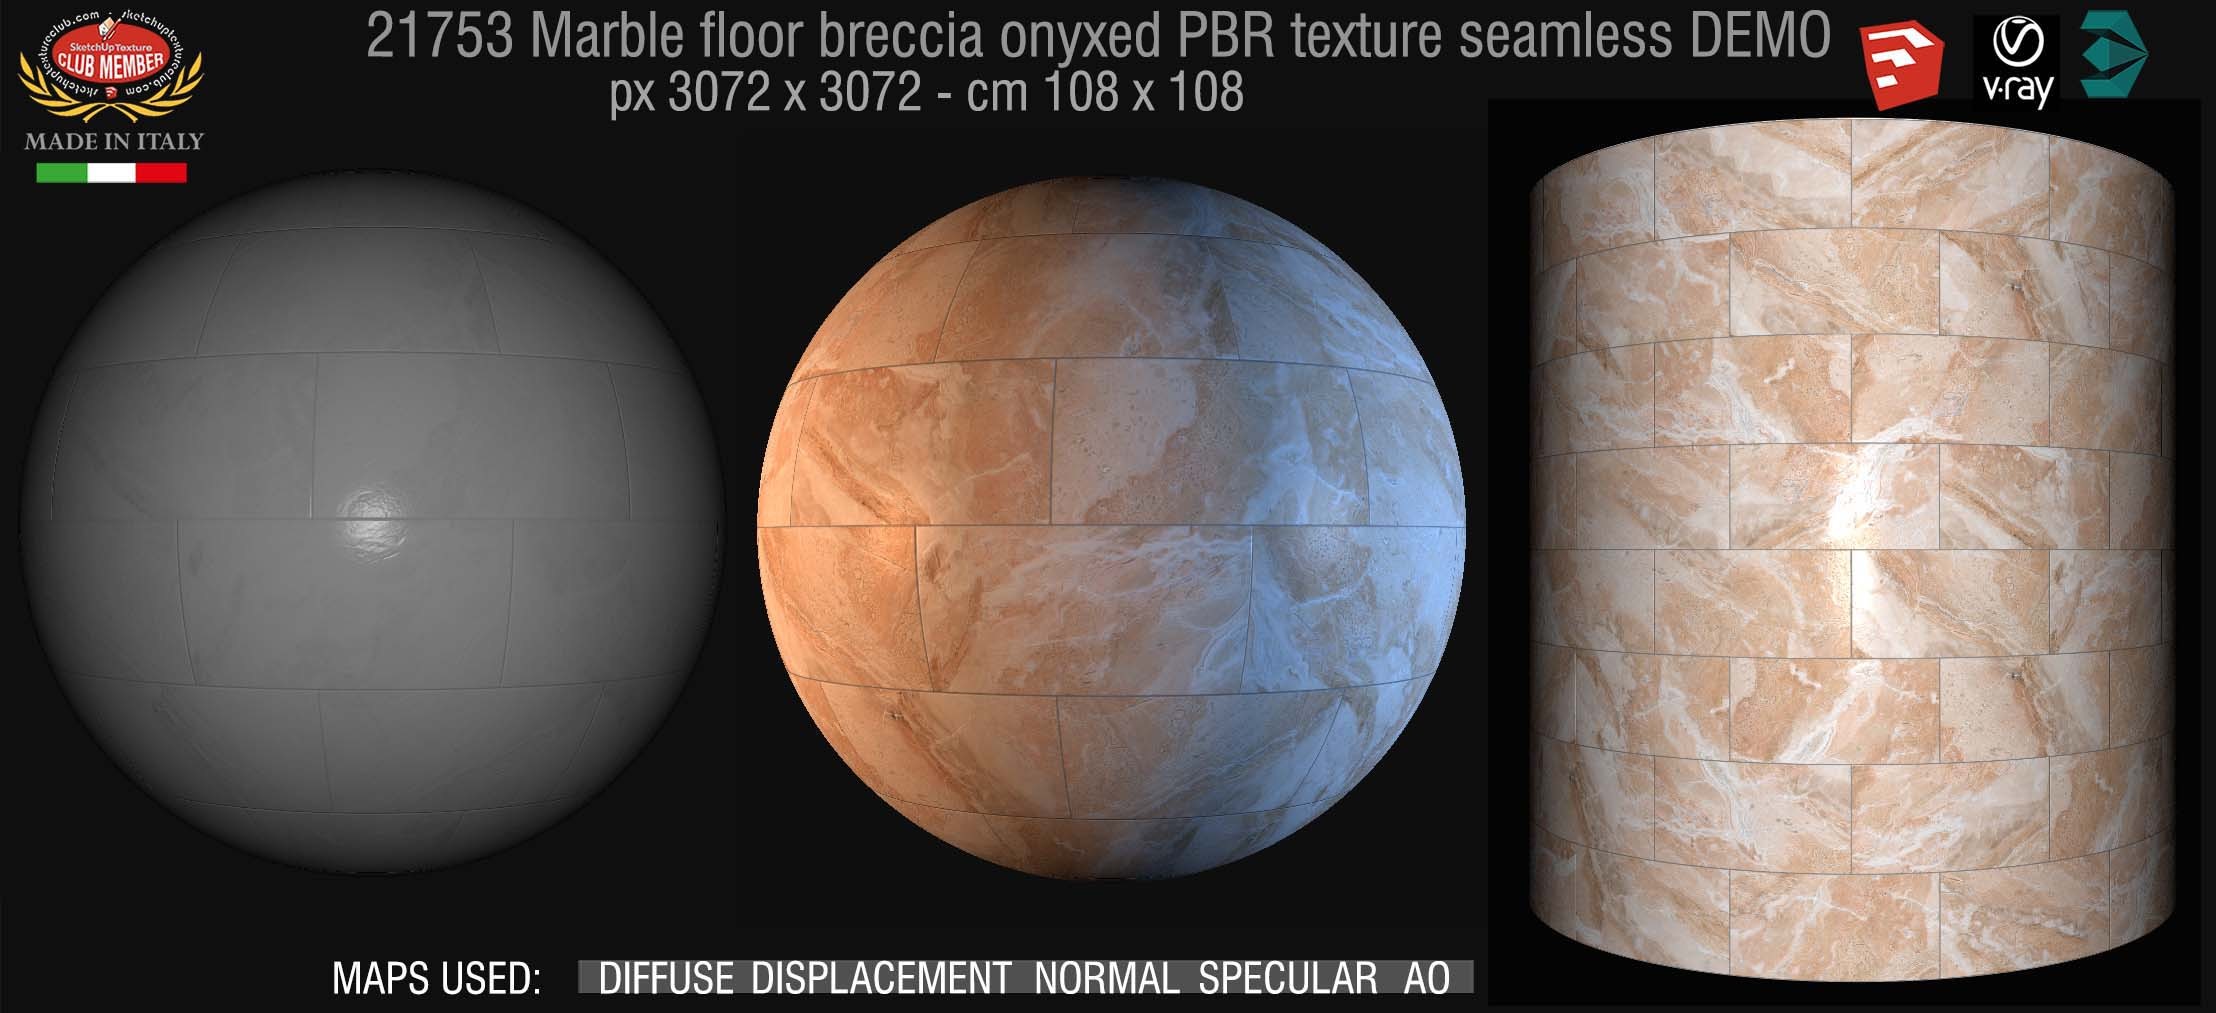 21753 Marble floor breccia onyxed PBR texture seamless DEMO